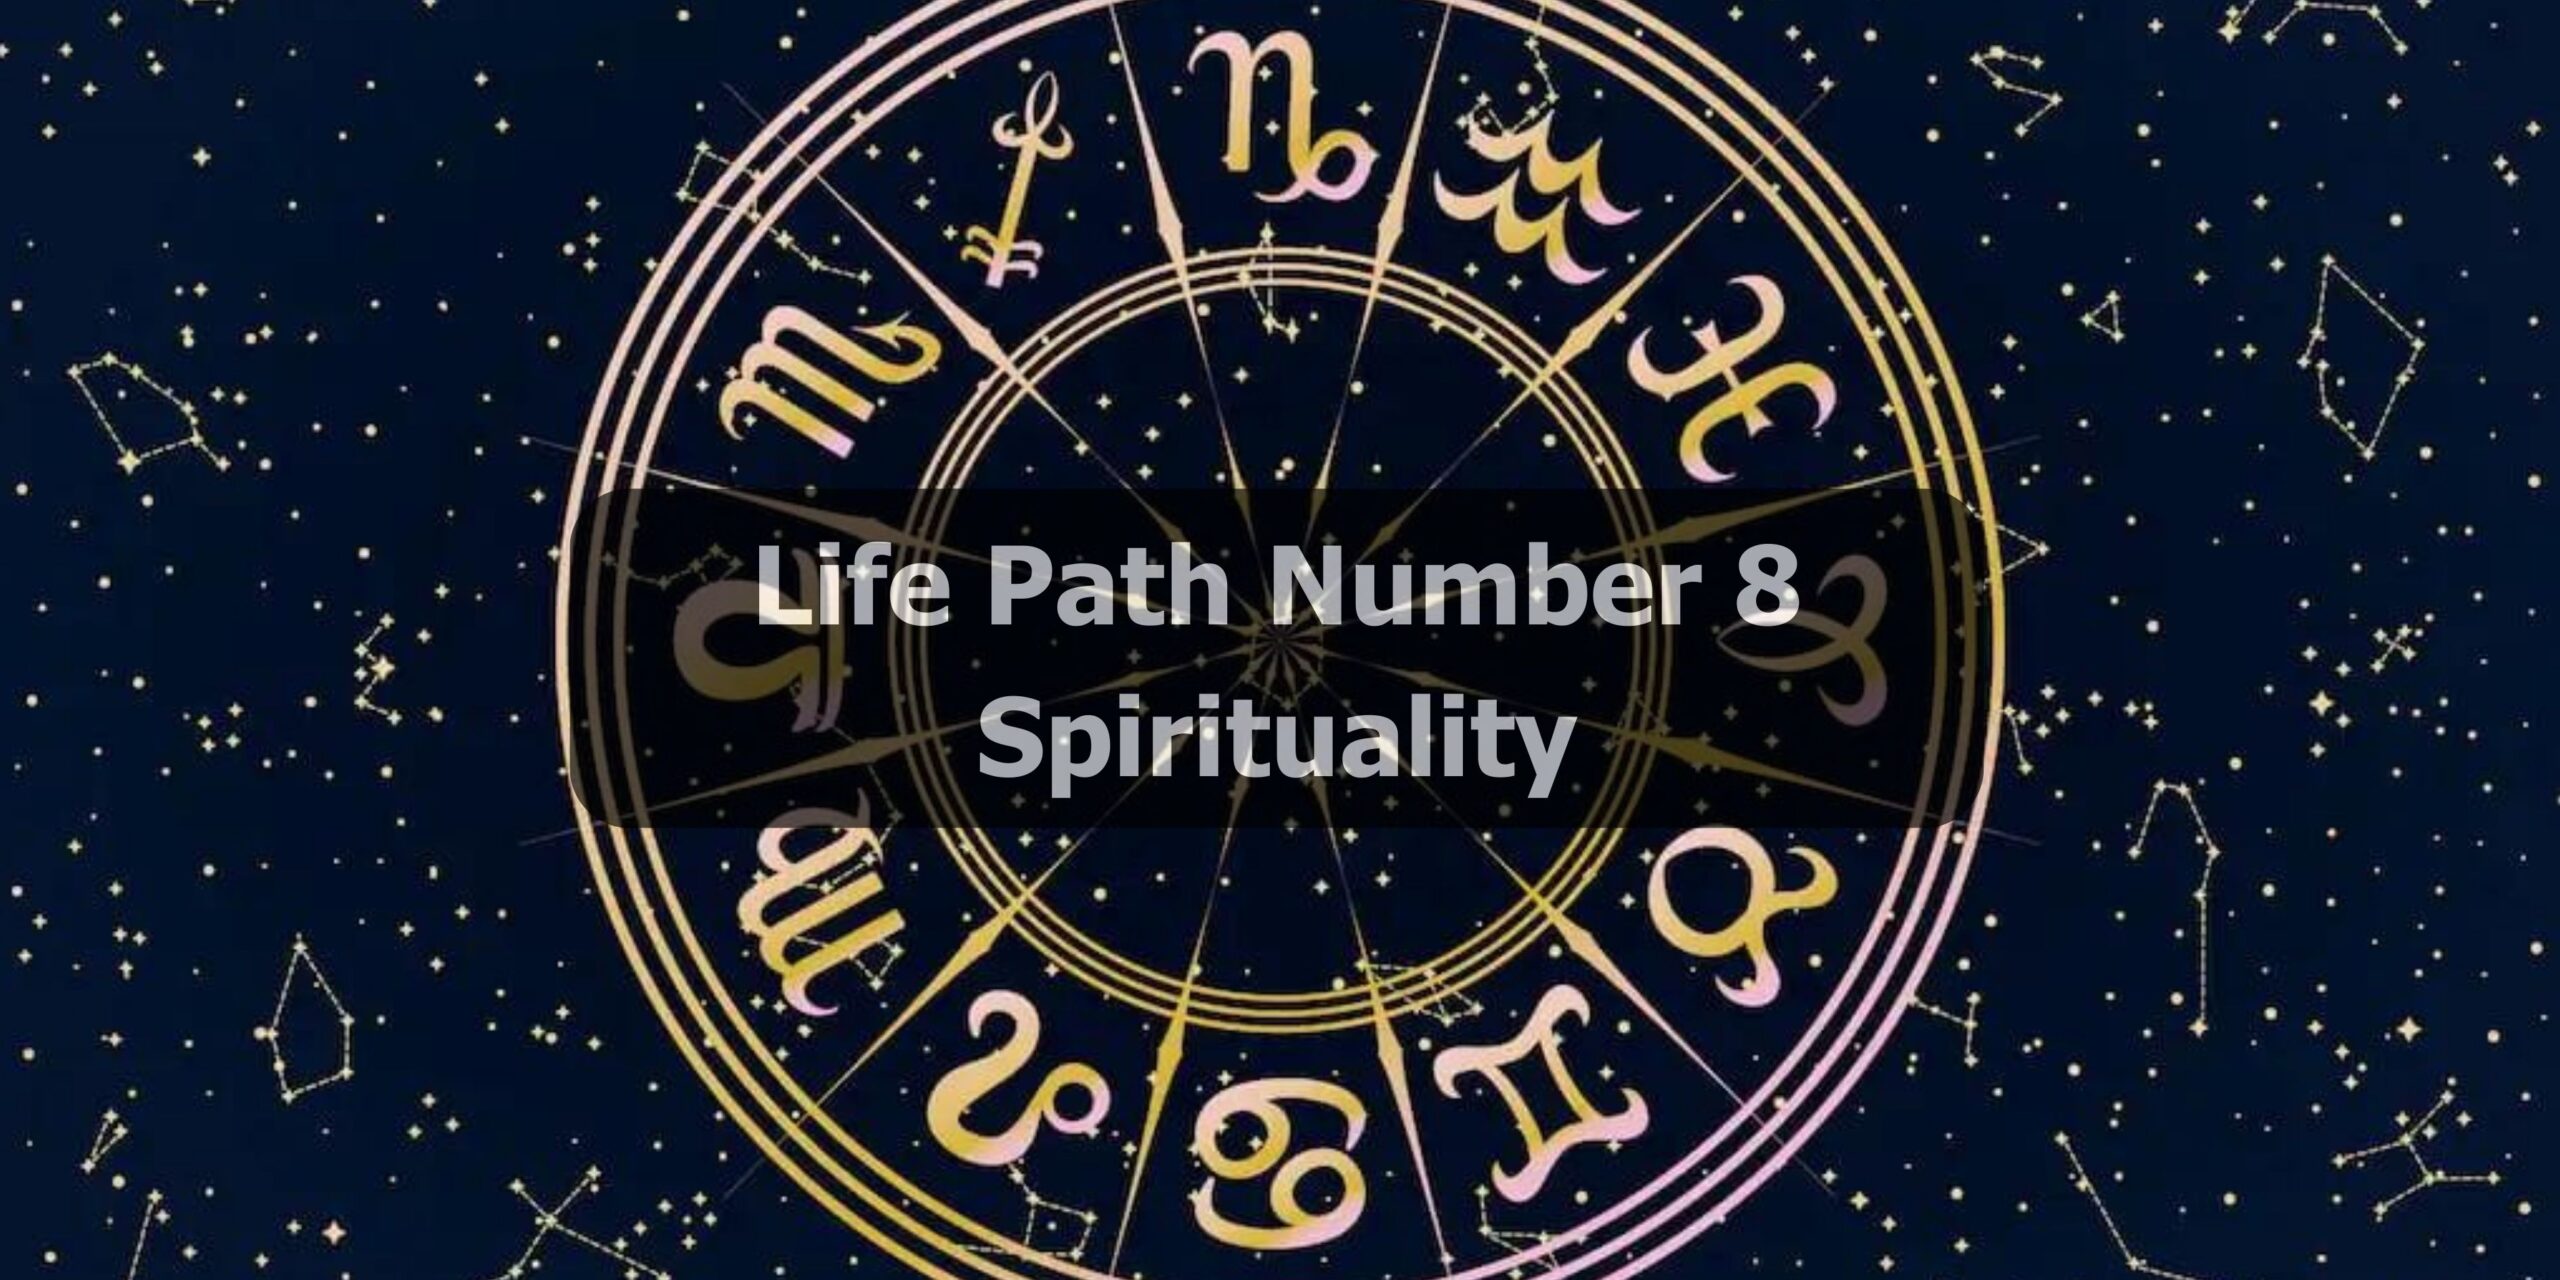 Life Path Number 8 Spirituality